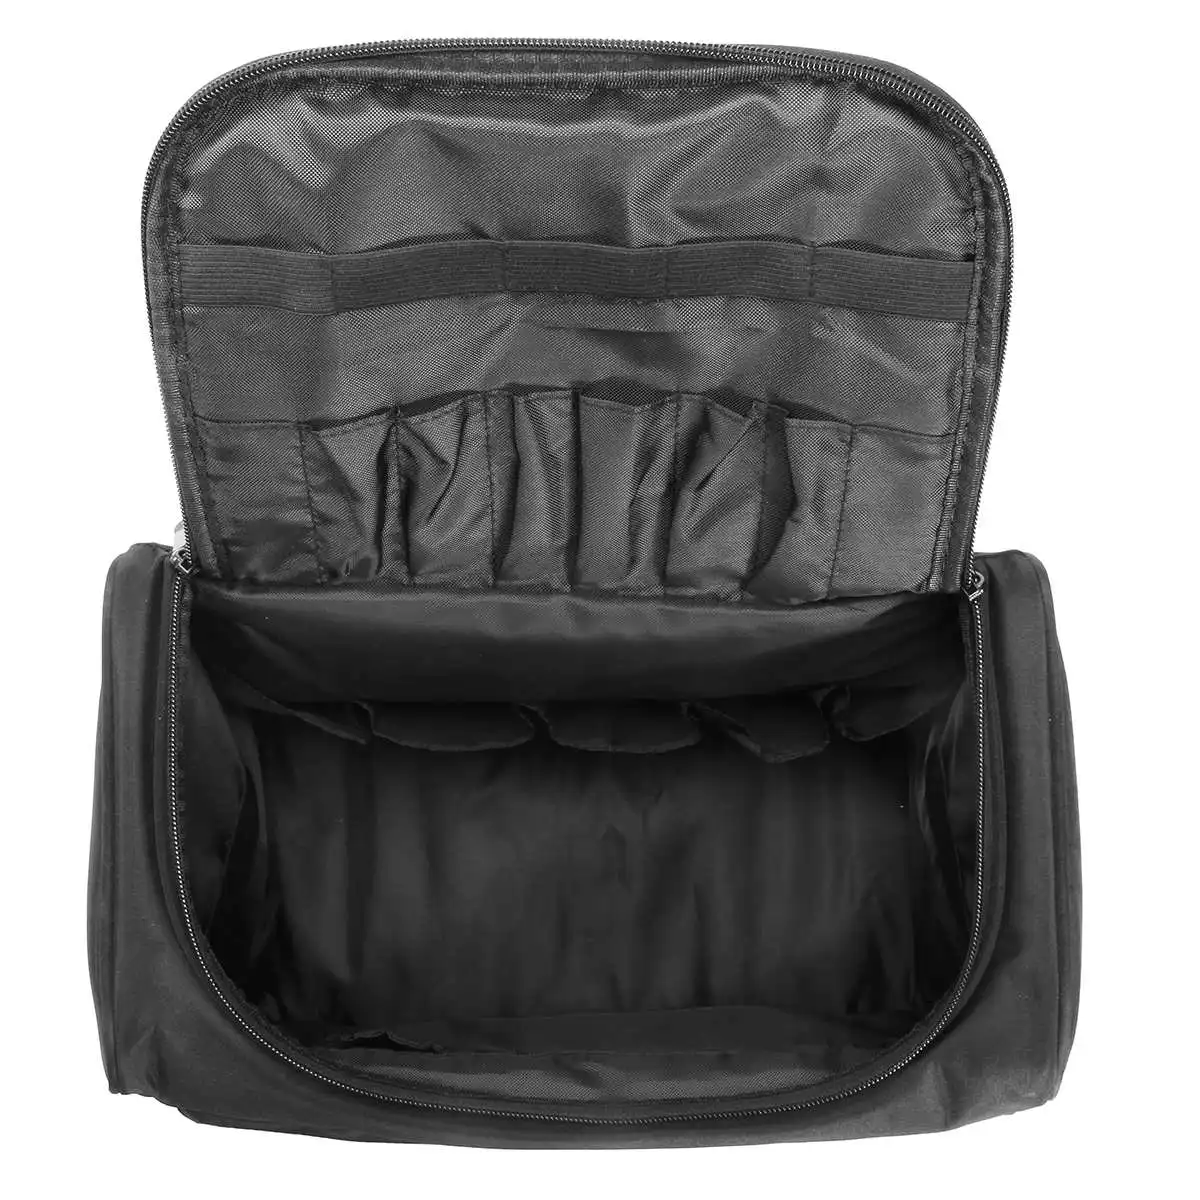 Grande Capacidade Multilayer Clapboard Bag, Professional Organizer Case, armazenamento Malas, alta qualidade